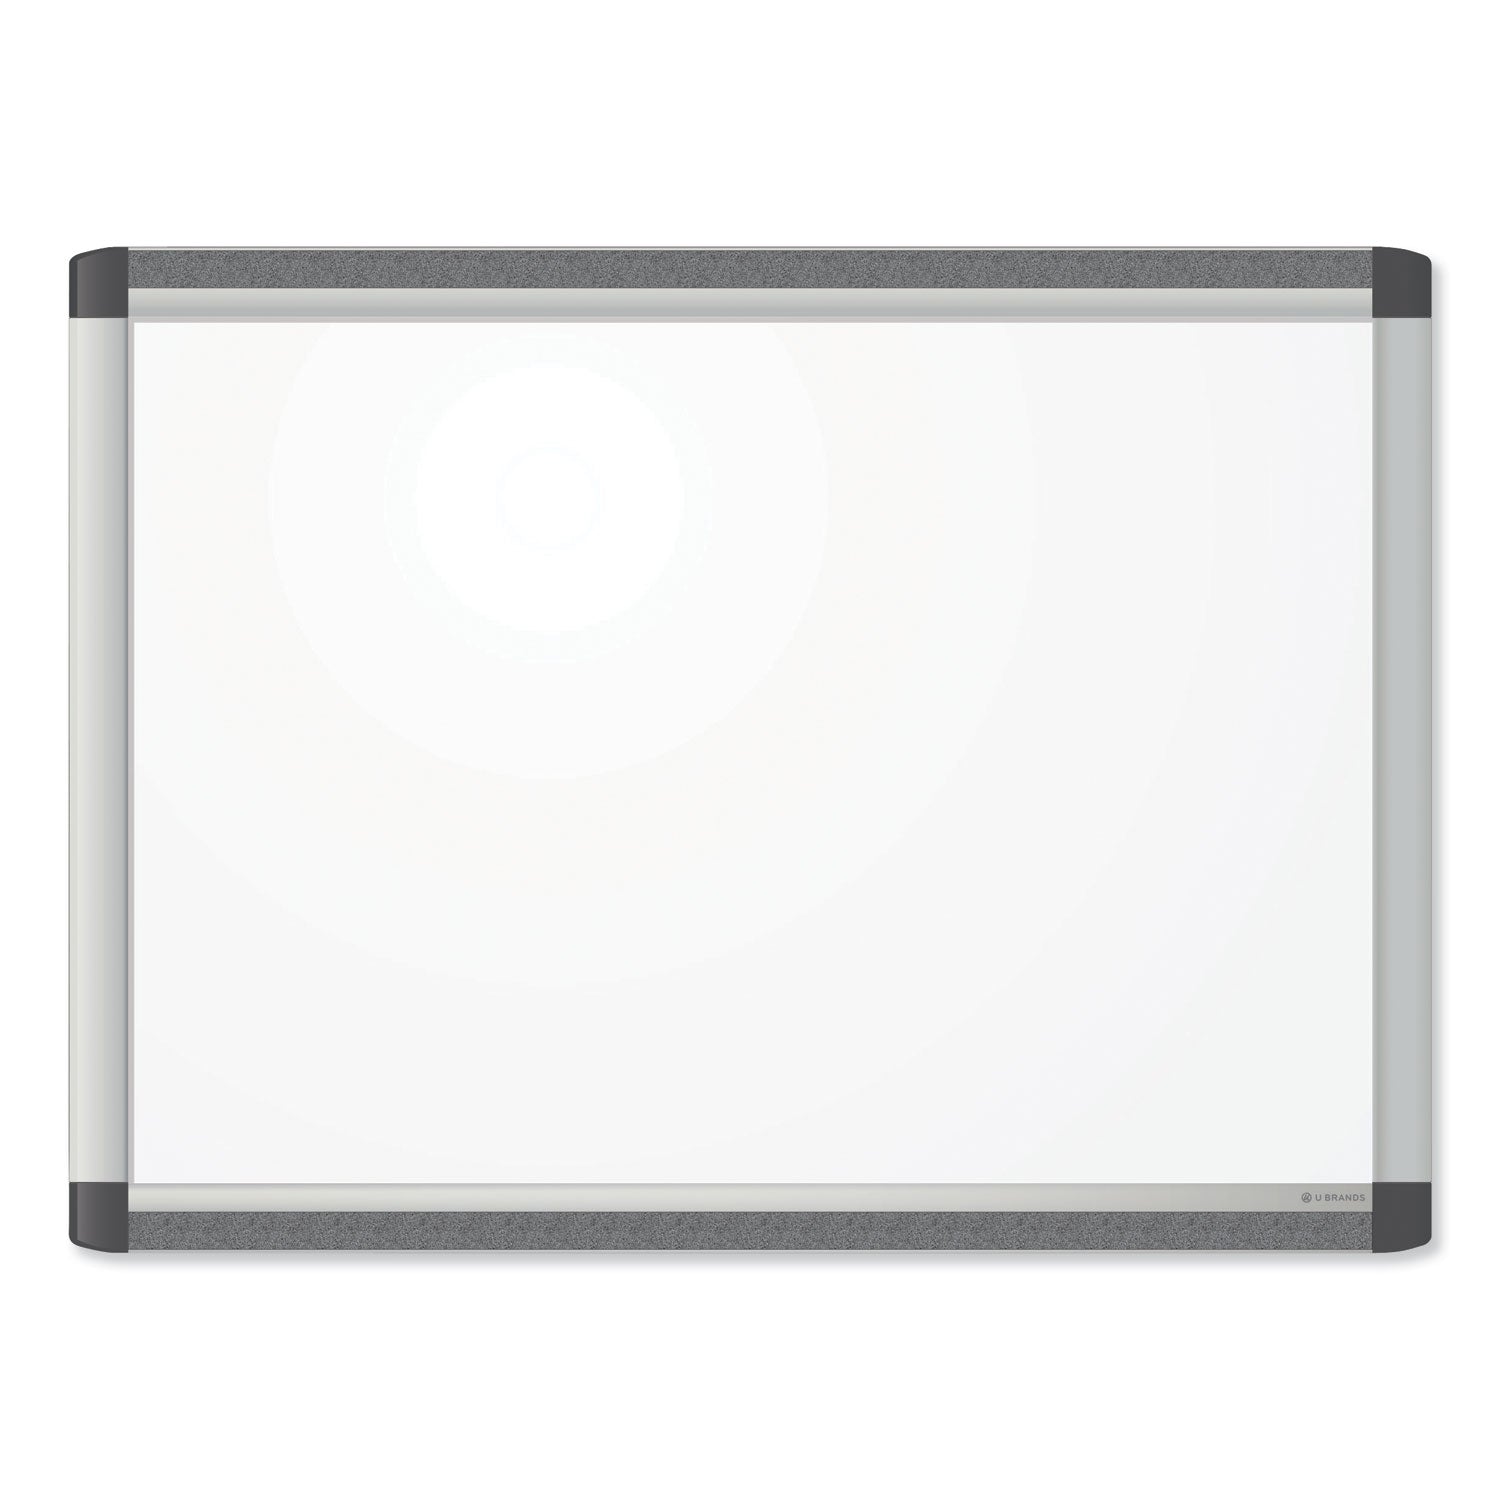 pinit-magnetic-dry-erase-board-23-x-17-white_ubr2804u0001 - 1